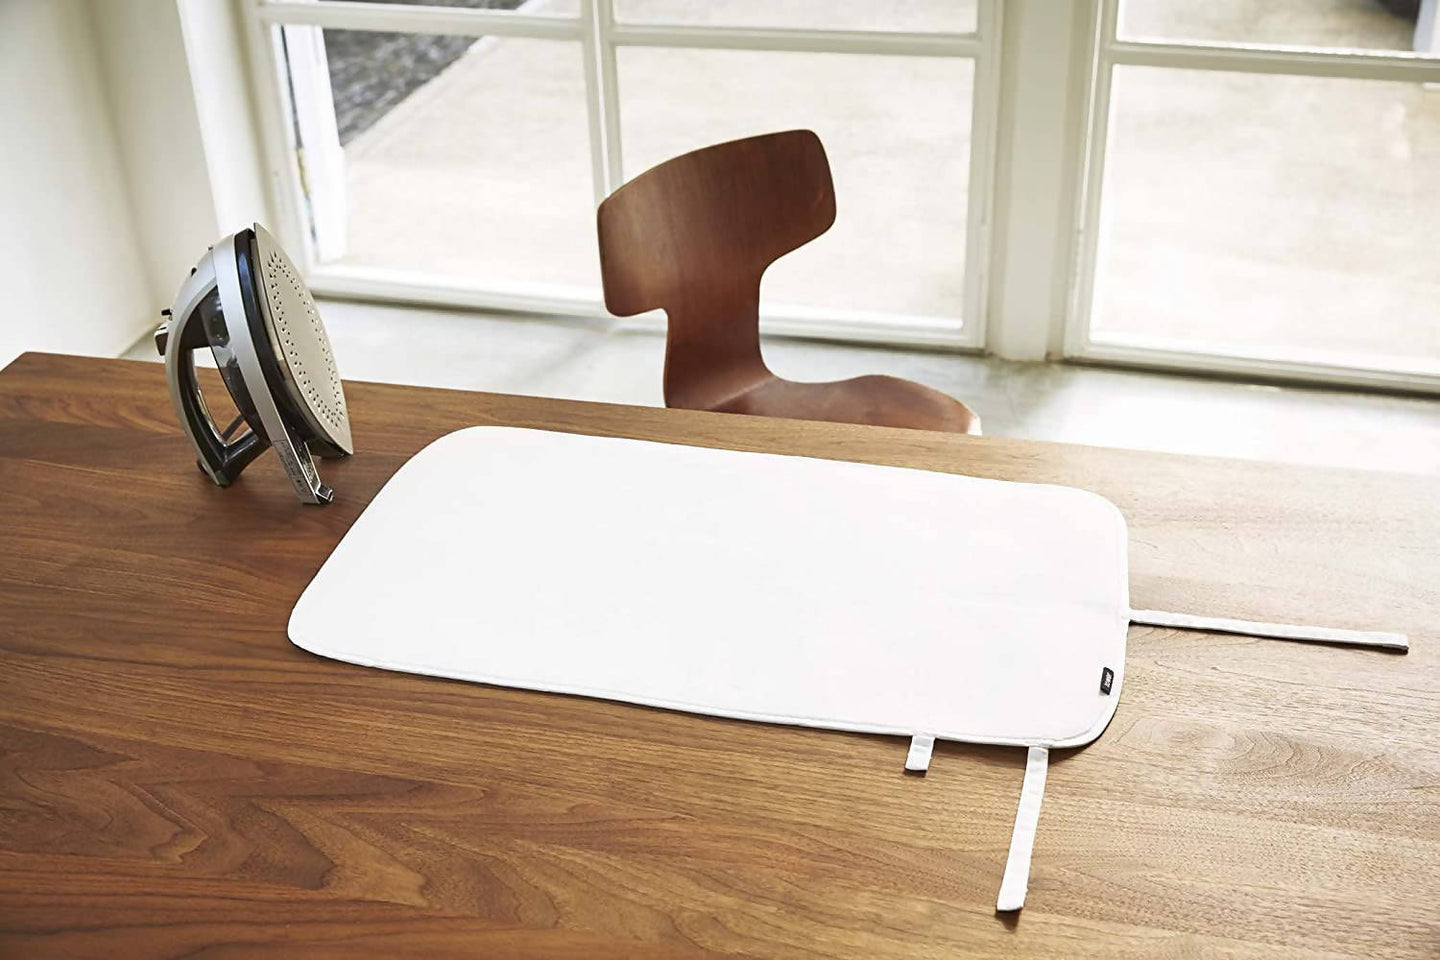 YAMAZAKI Ironing Mat 3357 – Iron Clothing on a Desk or Table – New Jap –  Allegro Japan